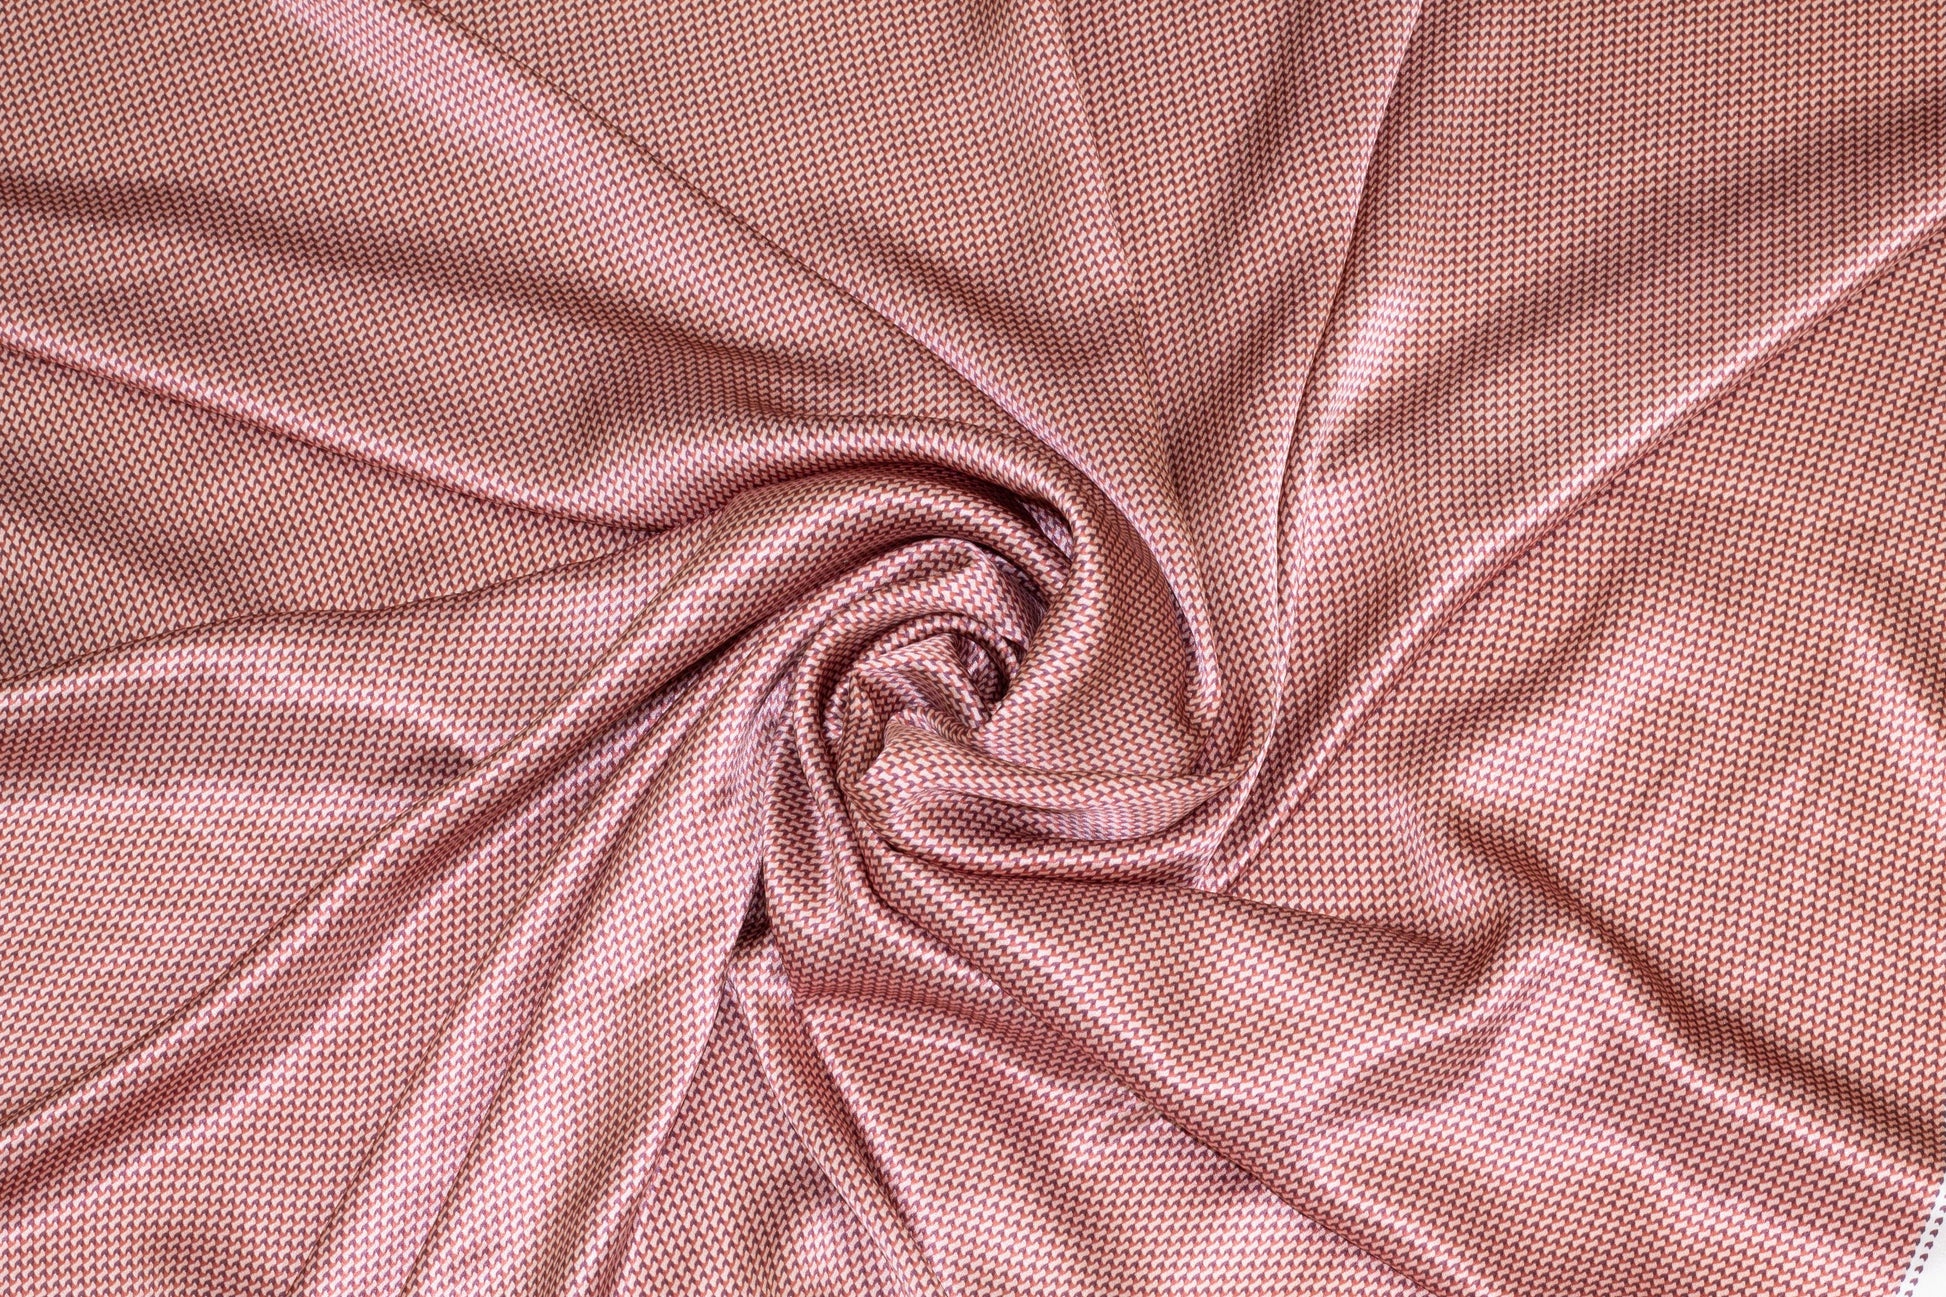 Blush Pink Silk Charmeuse - Prime Fabrics